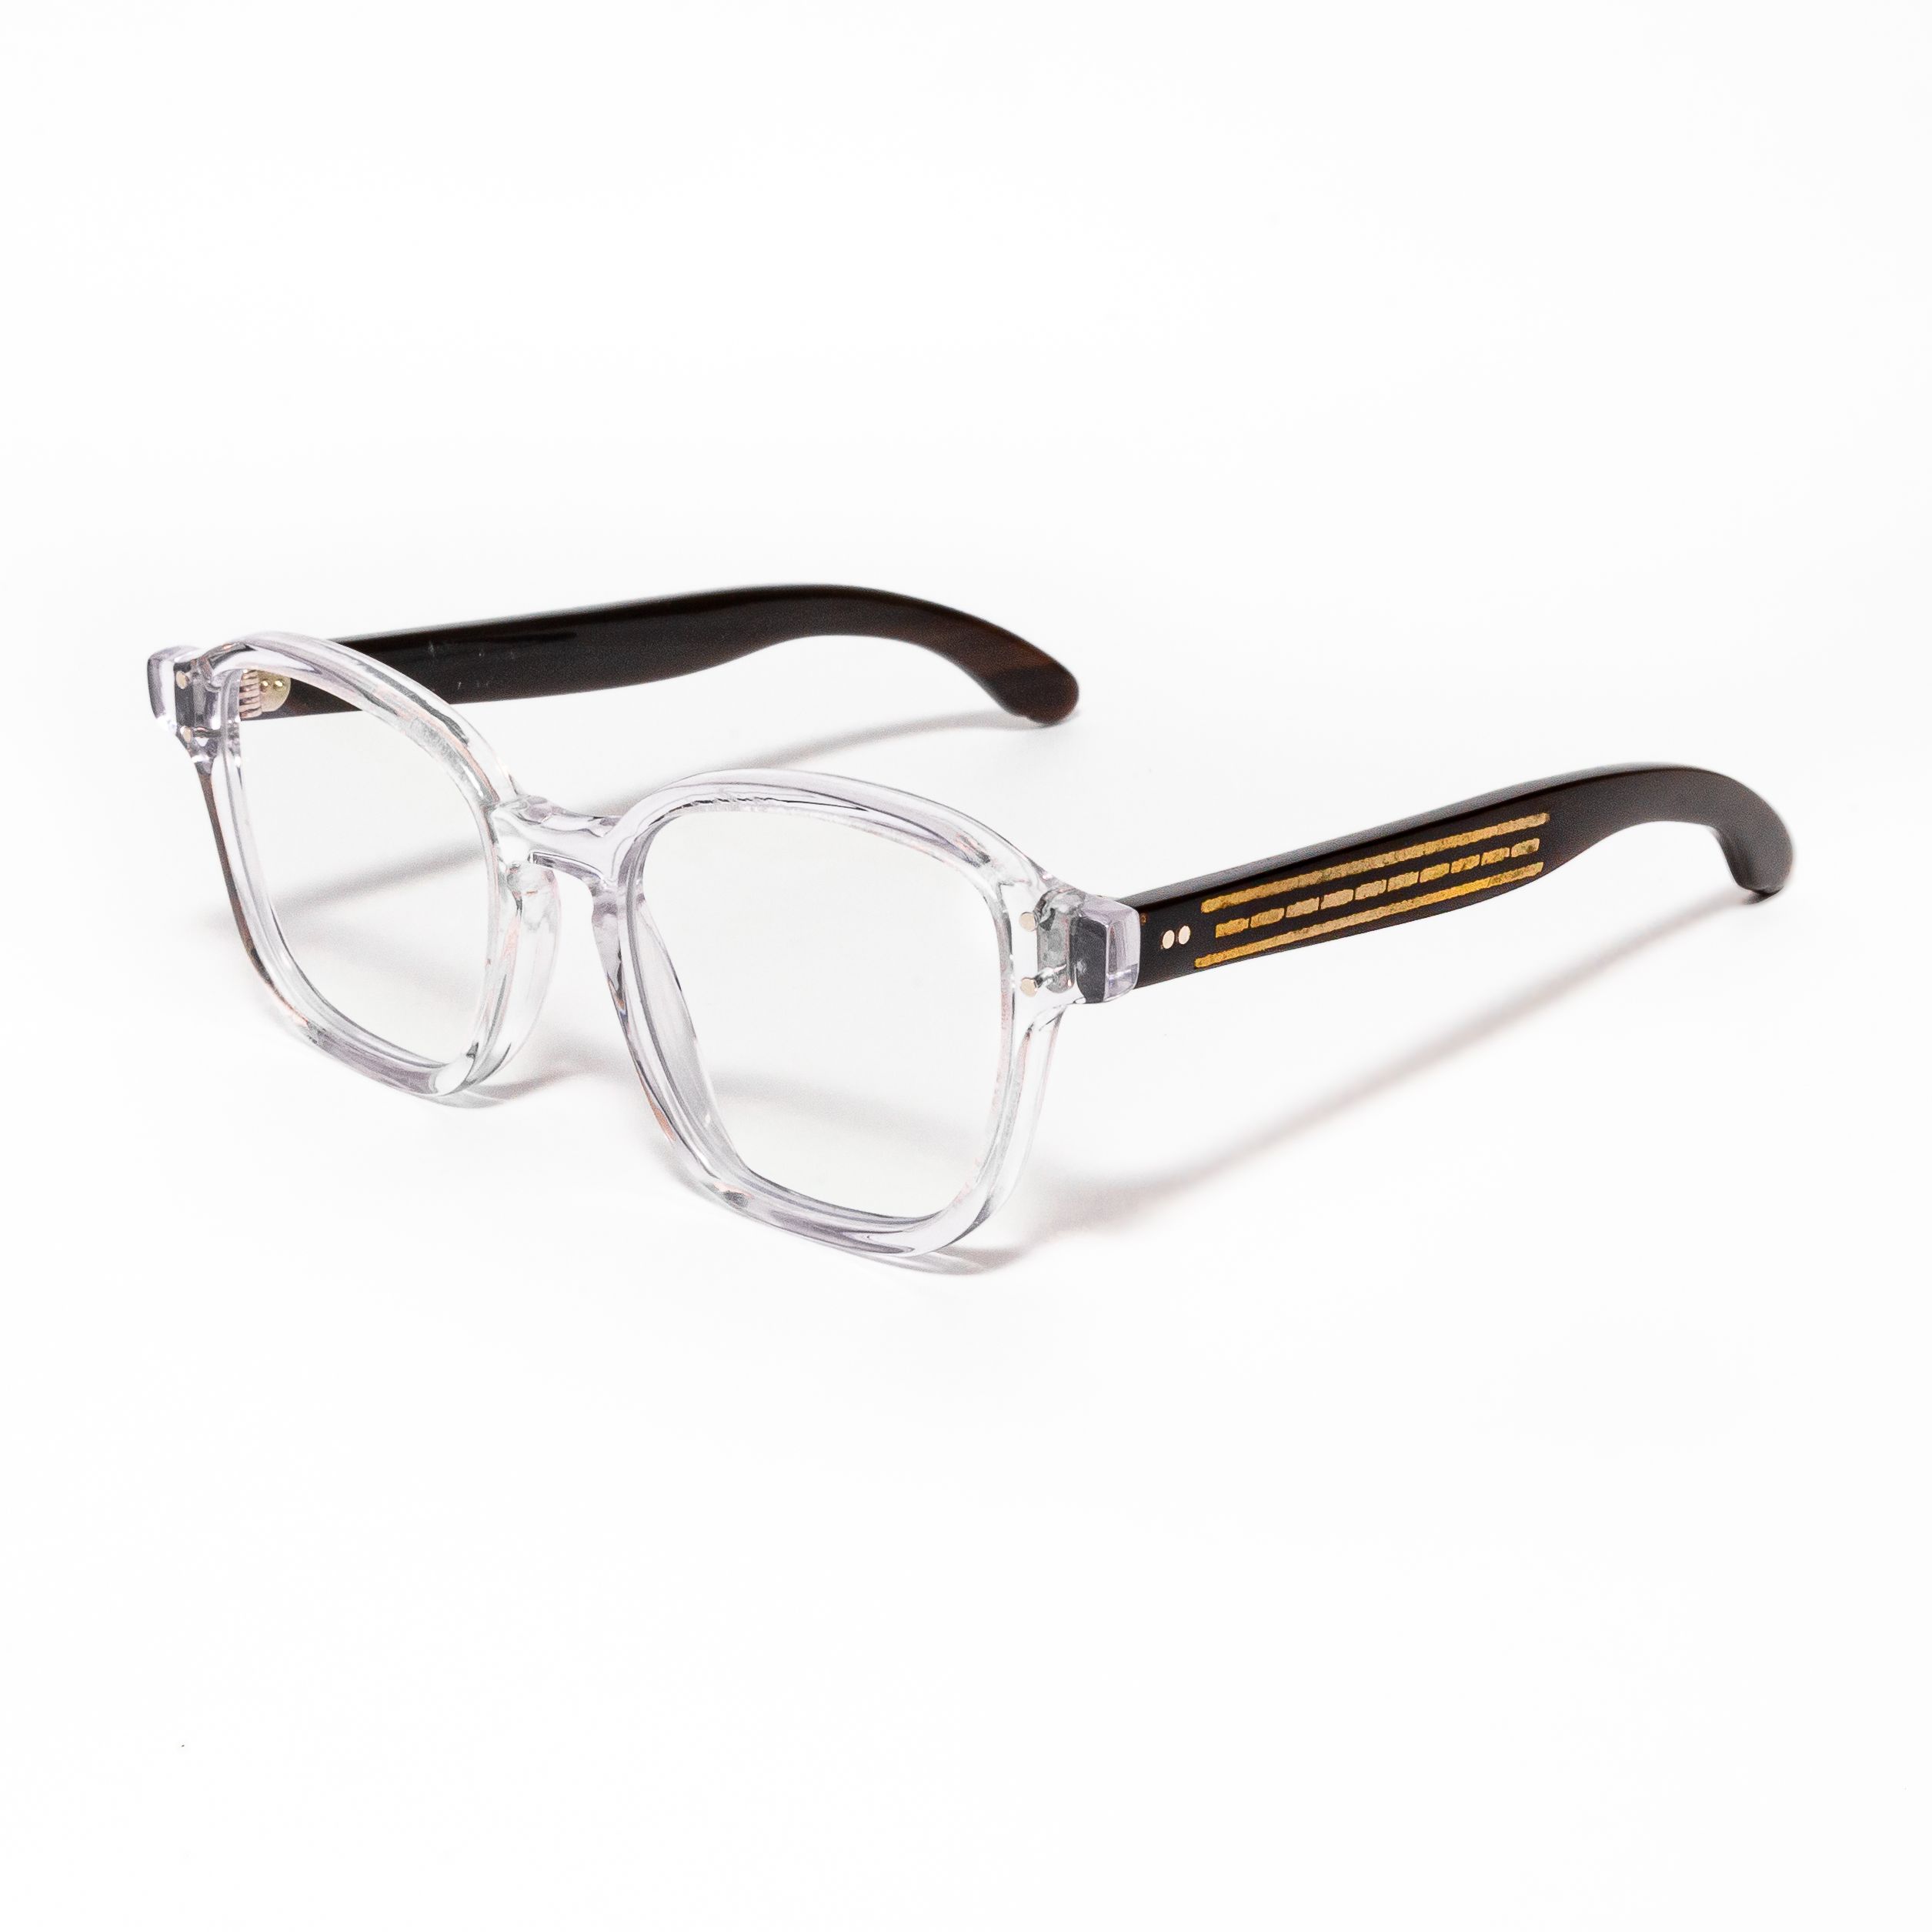 eyeglass lens brands